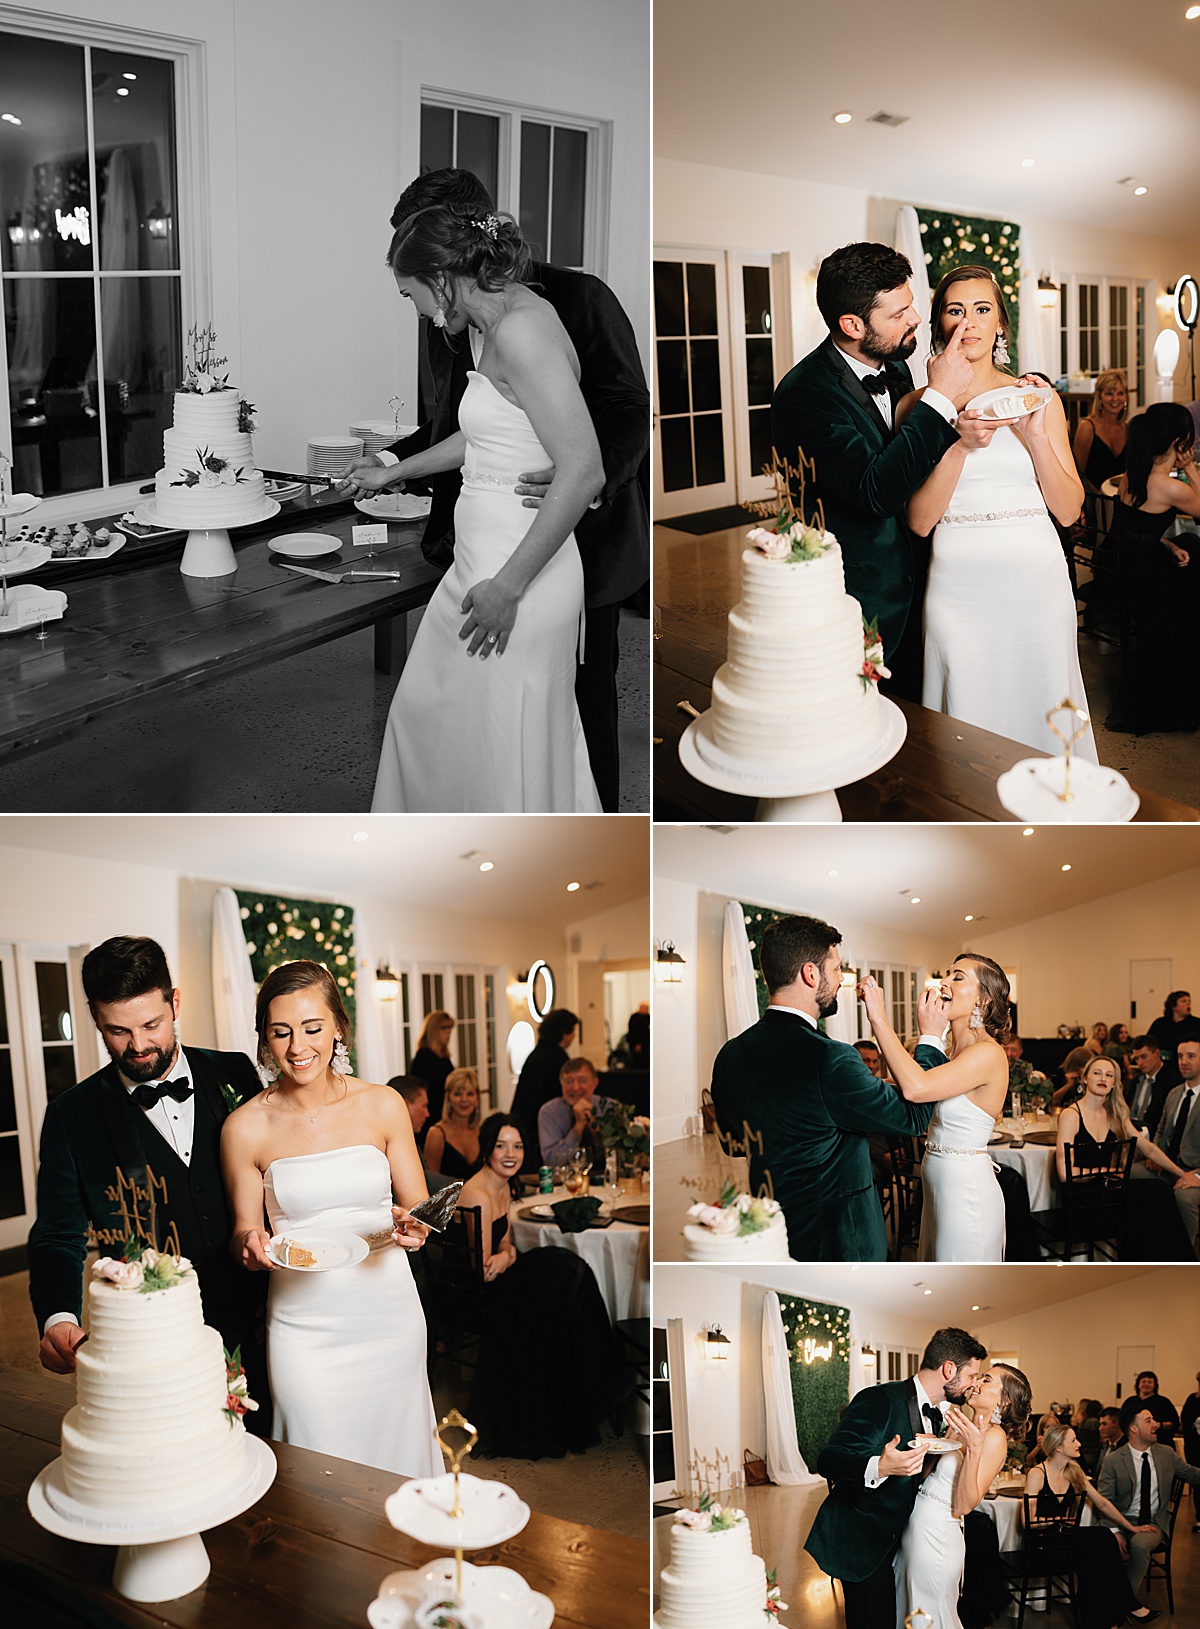 Bride and groom wedding reception cake cutting ceremony.